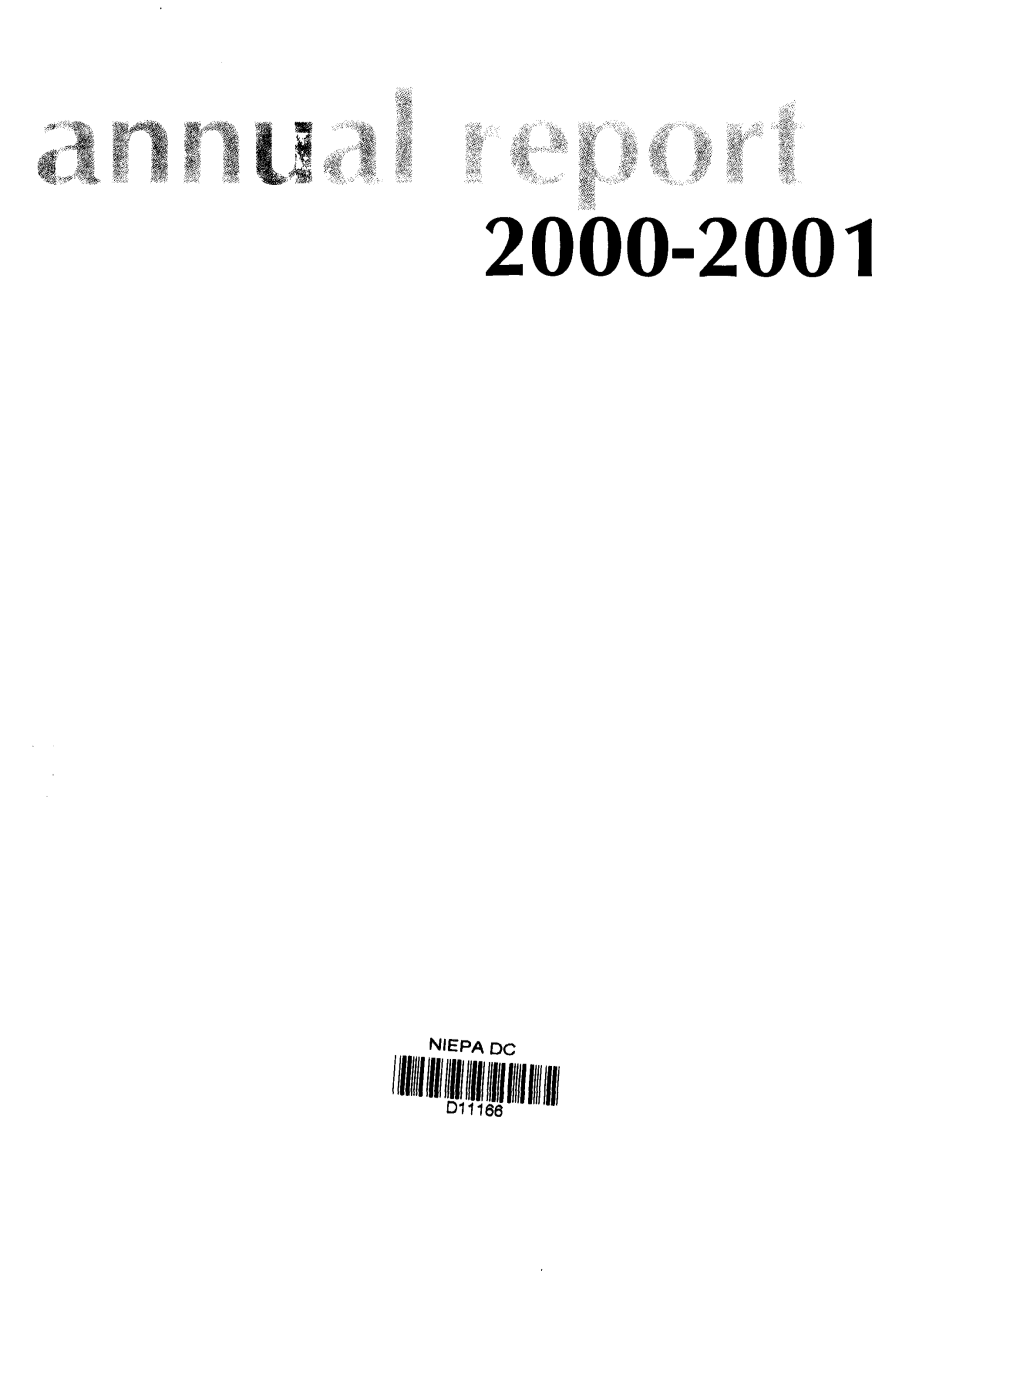 Annual Report2000-01 MHRD D11166.Pdf